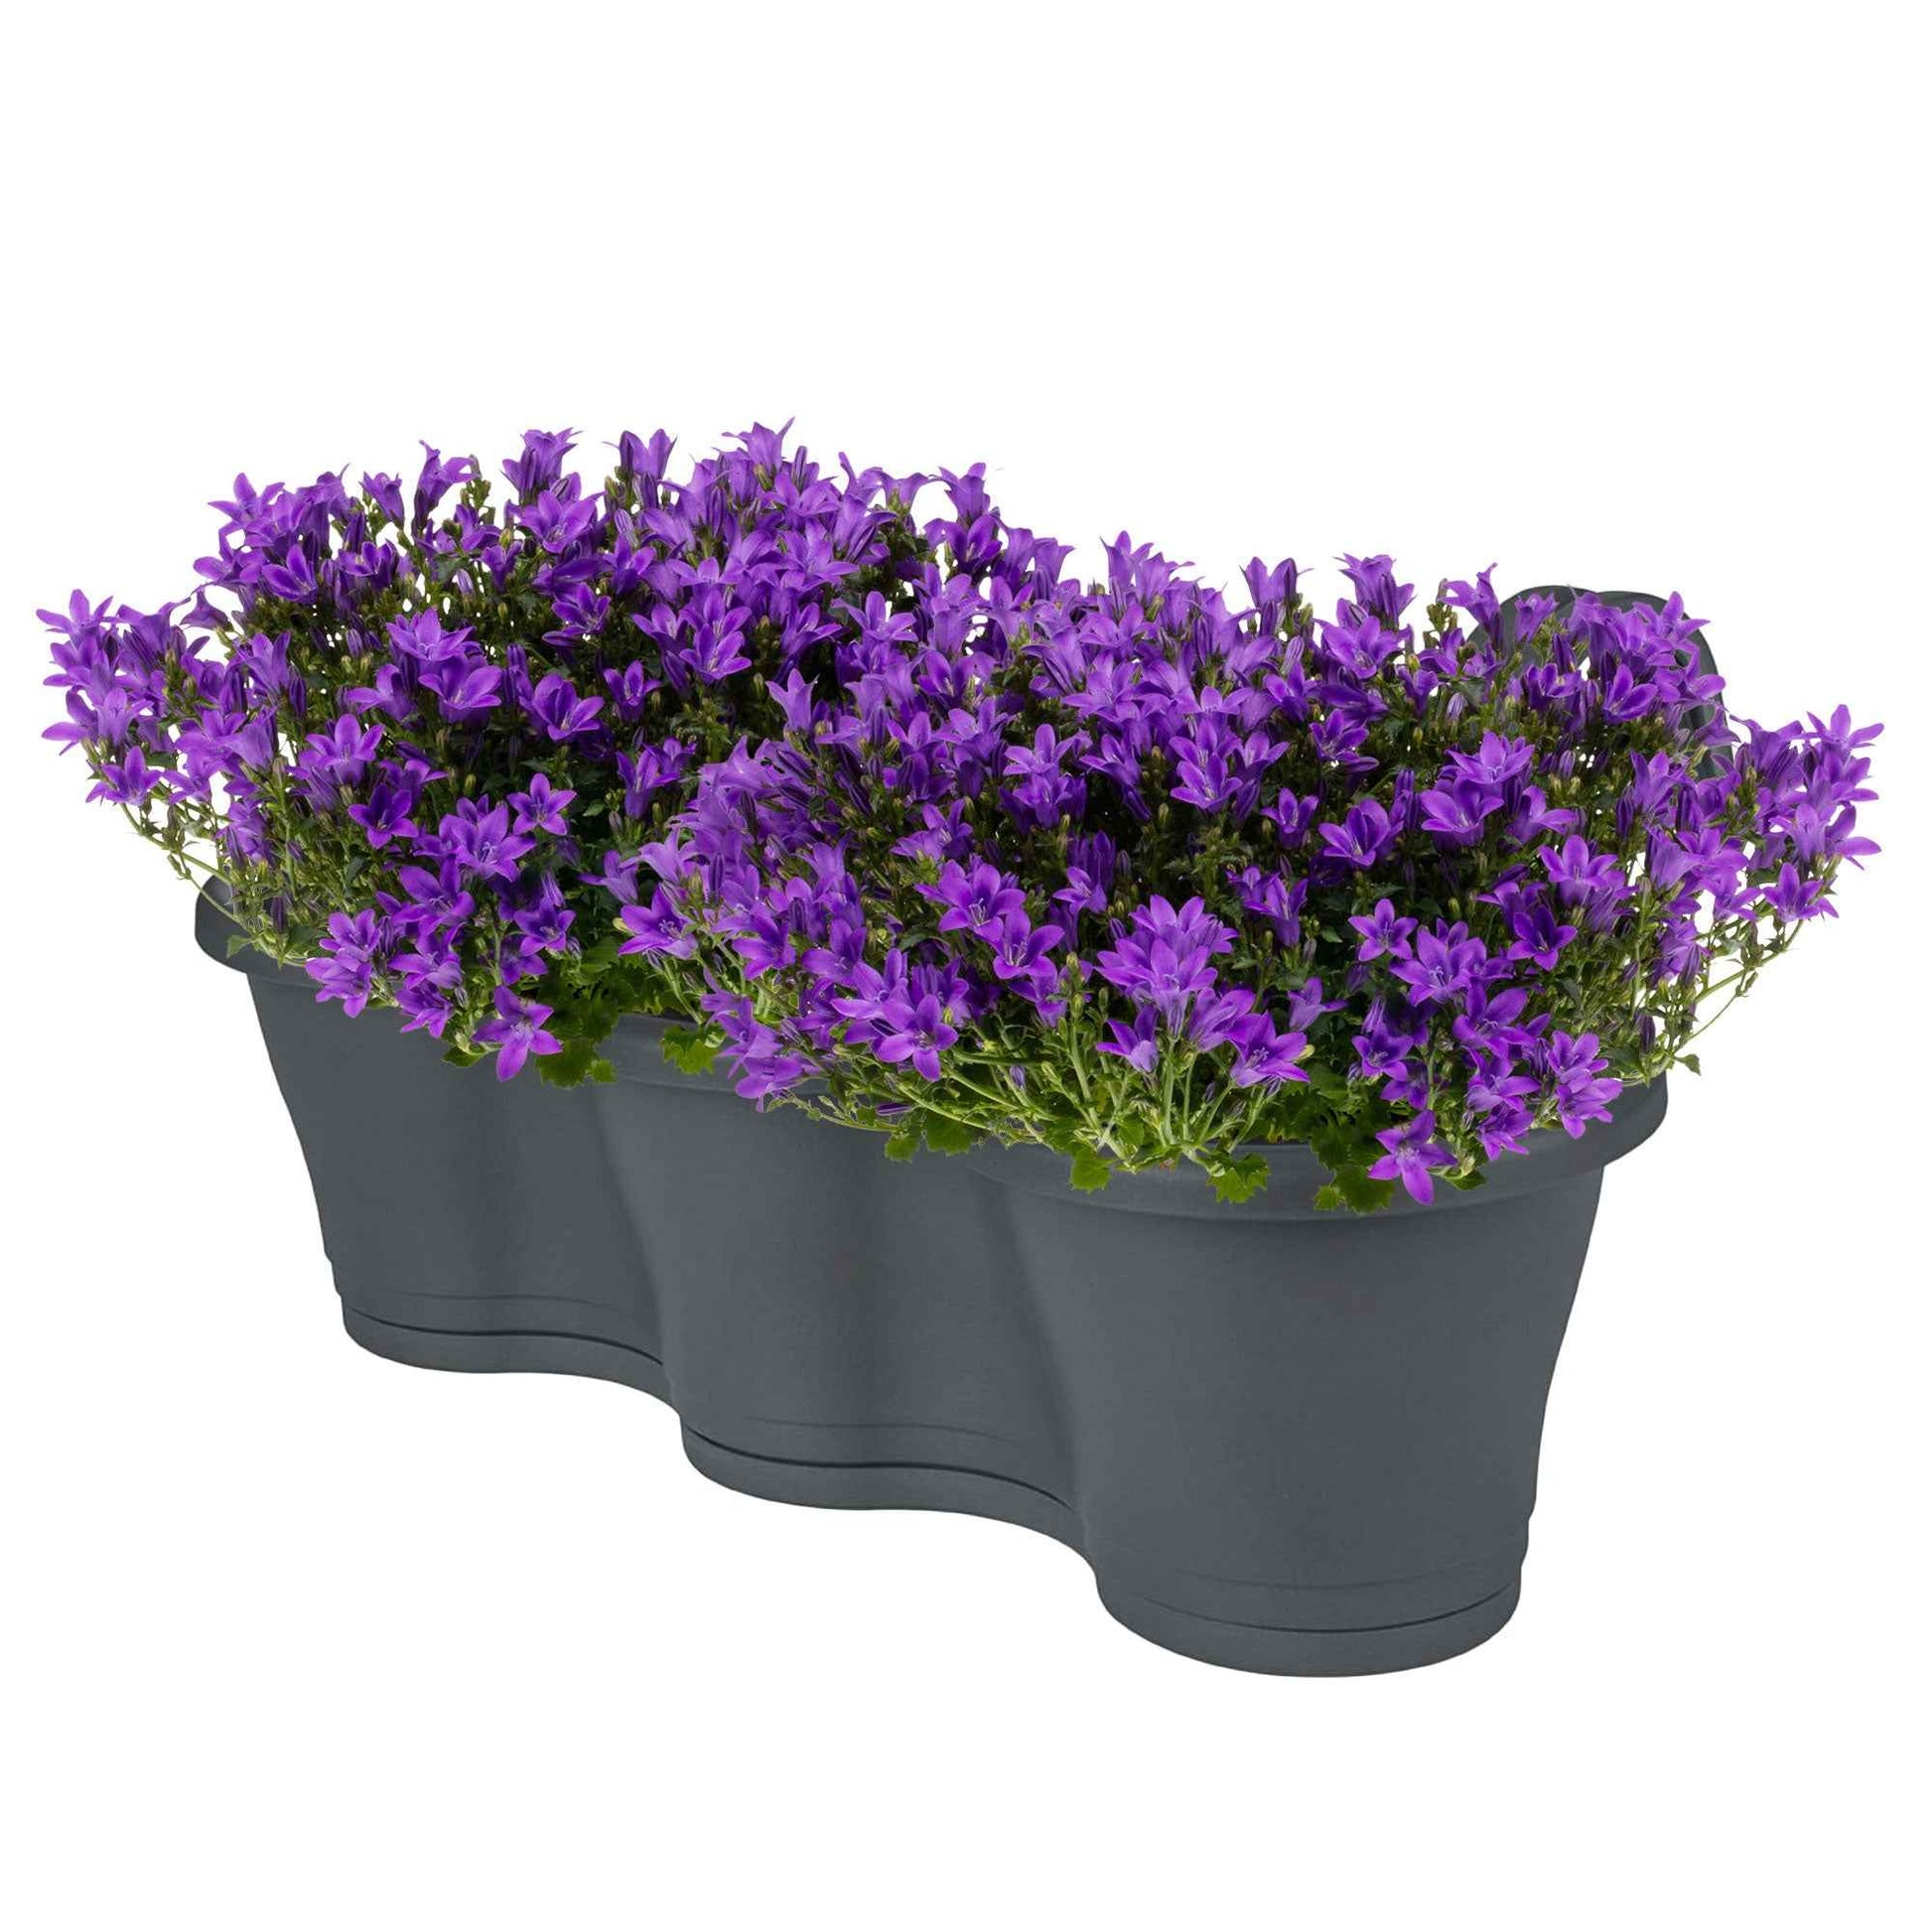 3x Klokjesbloem Campanula Ambella Intense Purple paars incl. balkonbak antraciet - Alle tuinplanten in pot